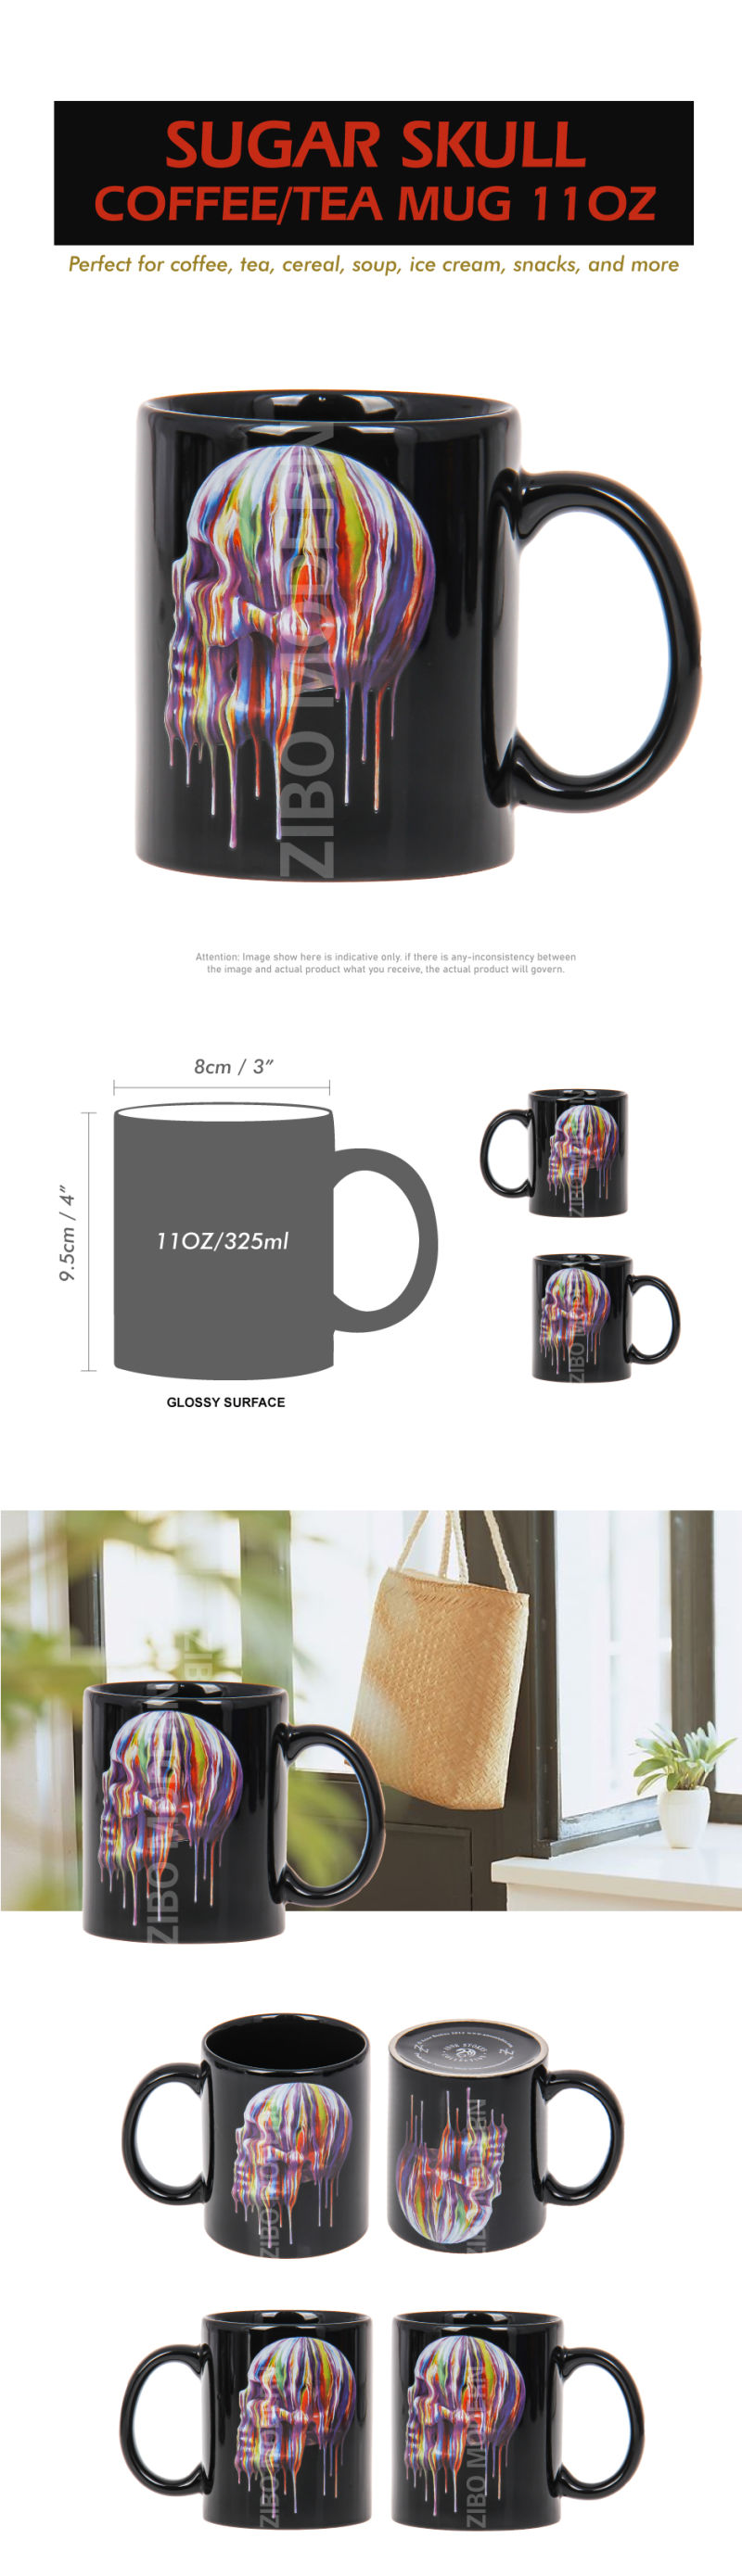 11 Oz Sugar Skull Ceramic Coffee / Tea Mug - Ceramic Mug - Porcelain Mugs